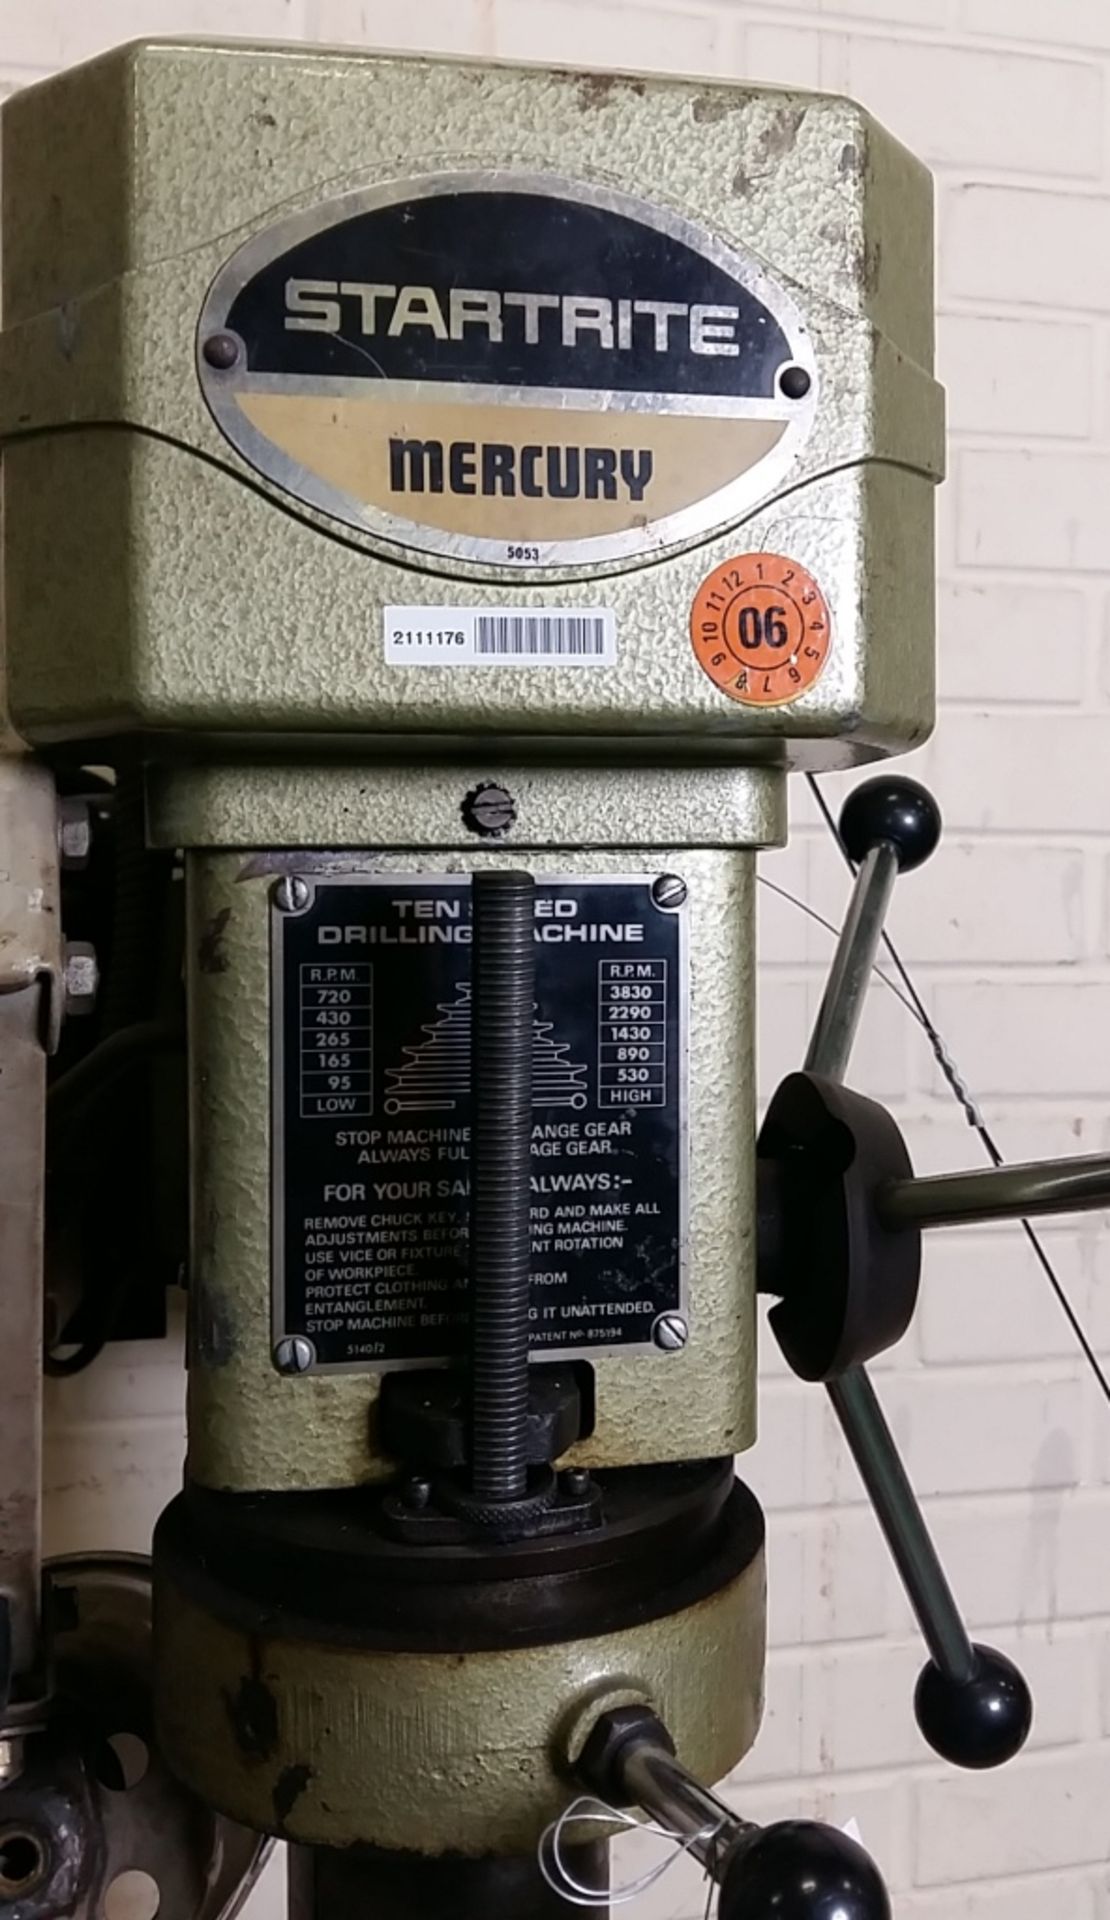 Startrite Mercury bench drill - Image 2 of 3